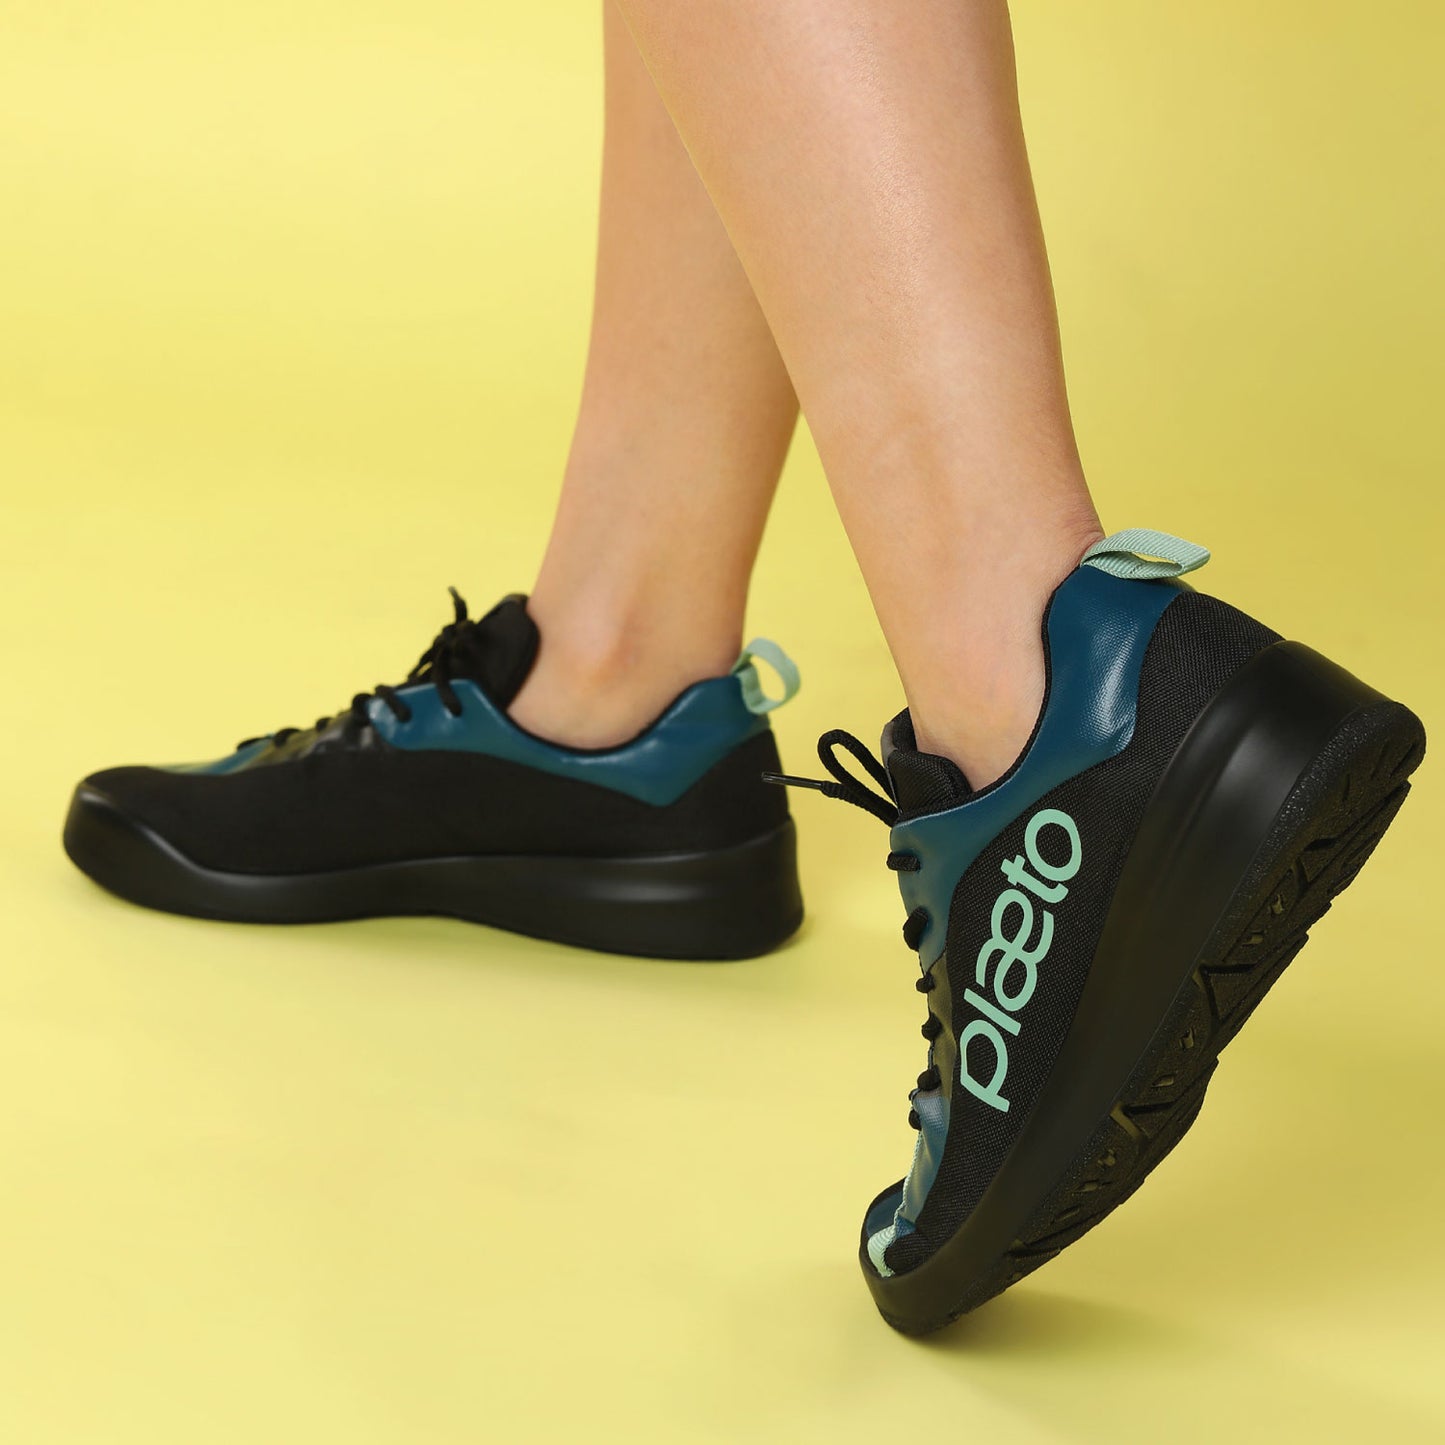 Drift Women's Sports Shoes - Black / Green